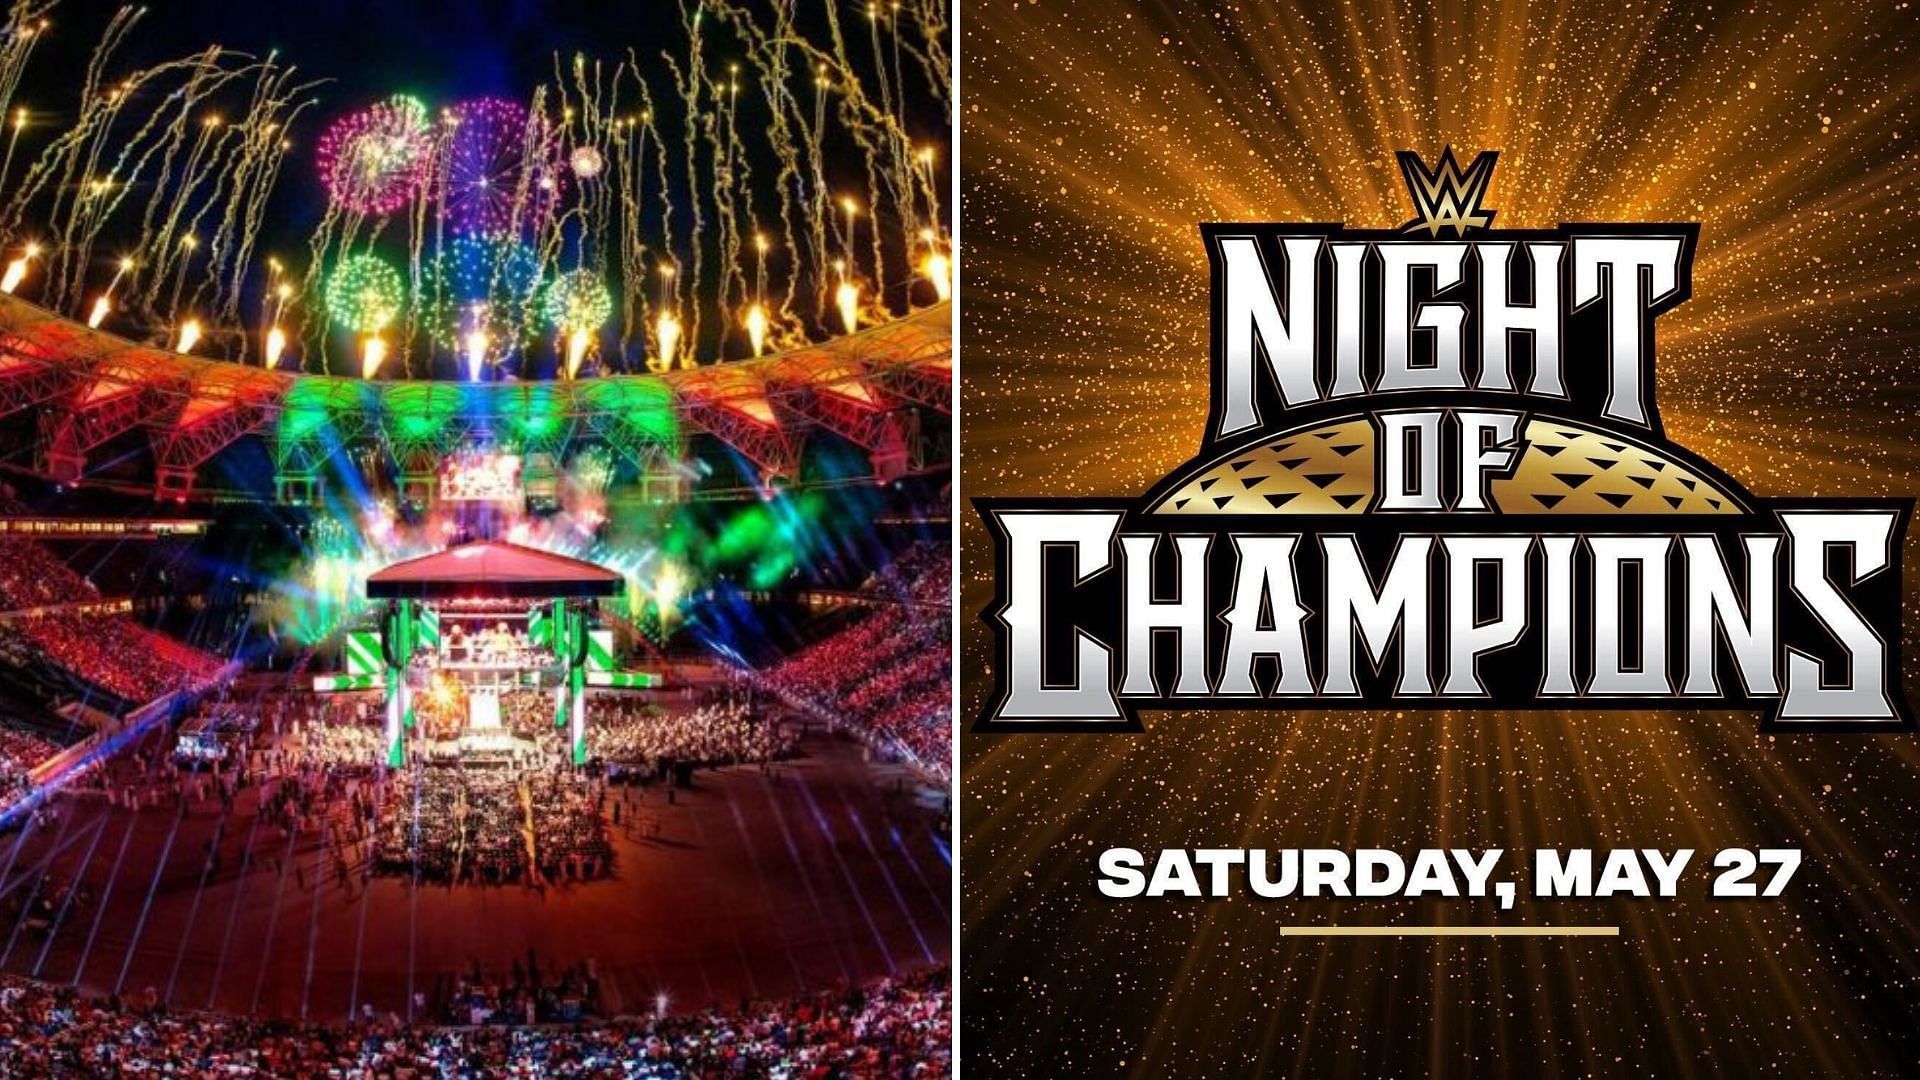 WWE Night of Champions is this Saturday night!